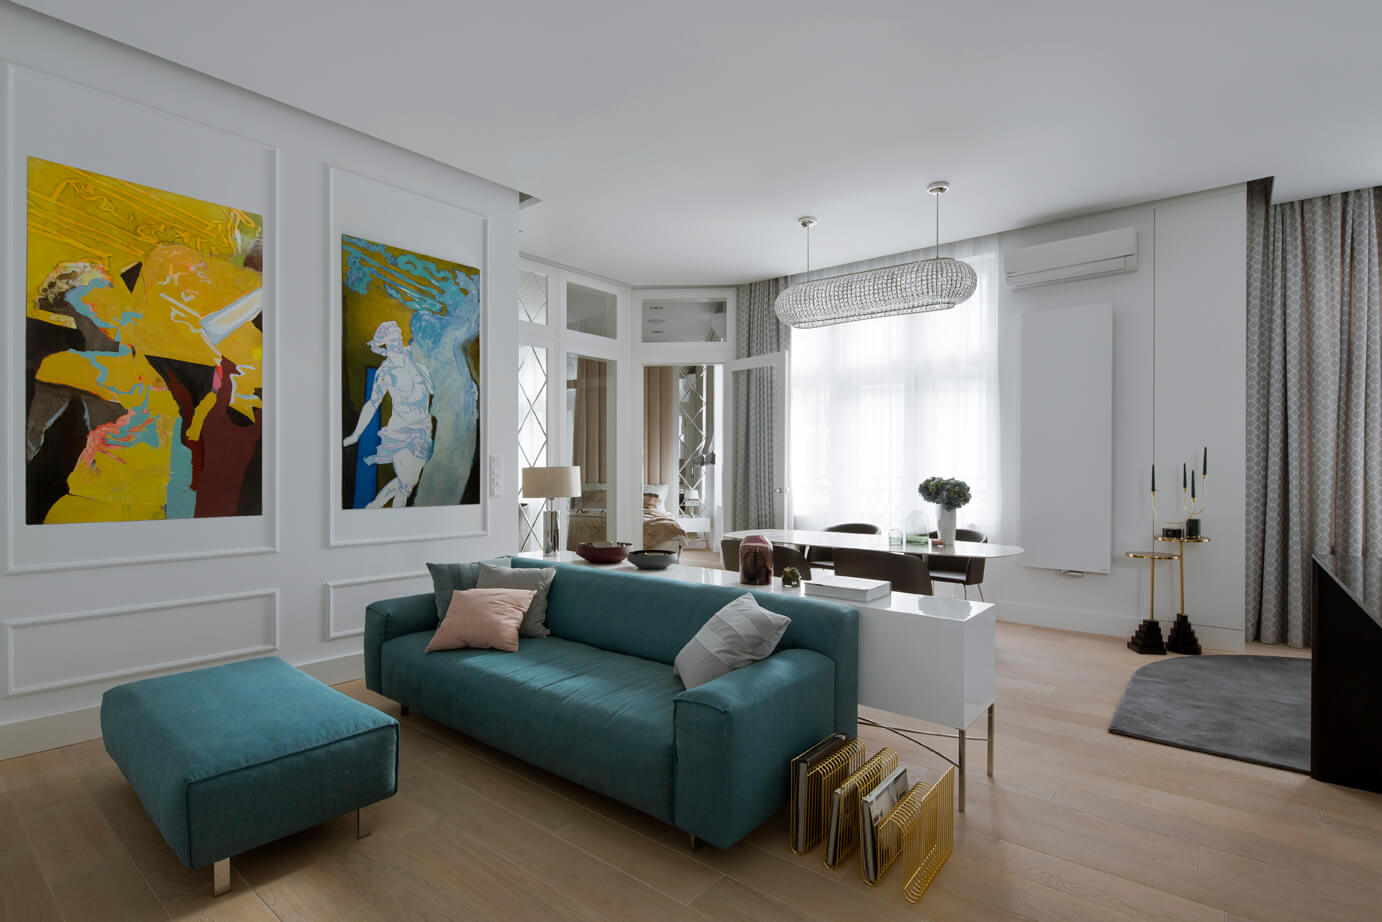 Apartment in Warsaw by Nasciturus Design